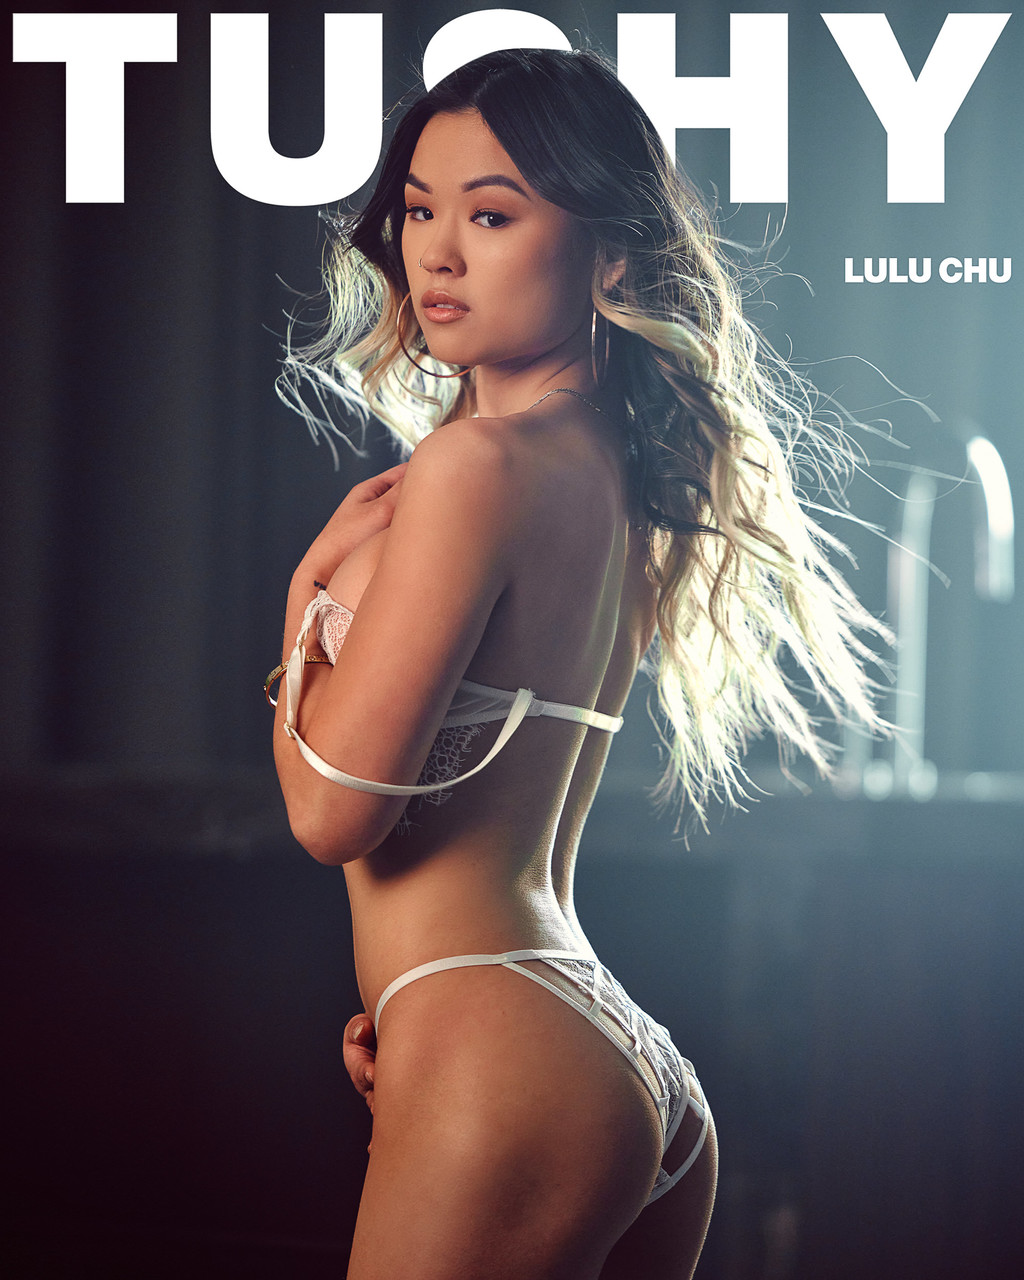 Petite Asian Lulu Chu gets anal fucked & gives an ass to mouth cock licking foto porno #425580936 | Tushy Pics, Lulu Chu, Mick Blue, Asian, porno mobile